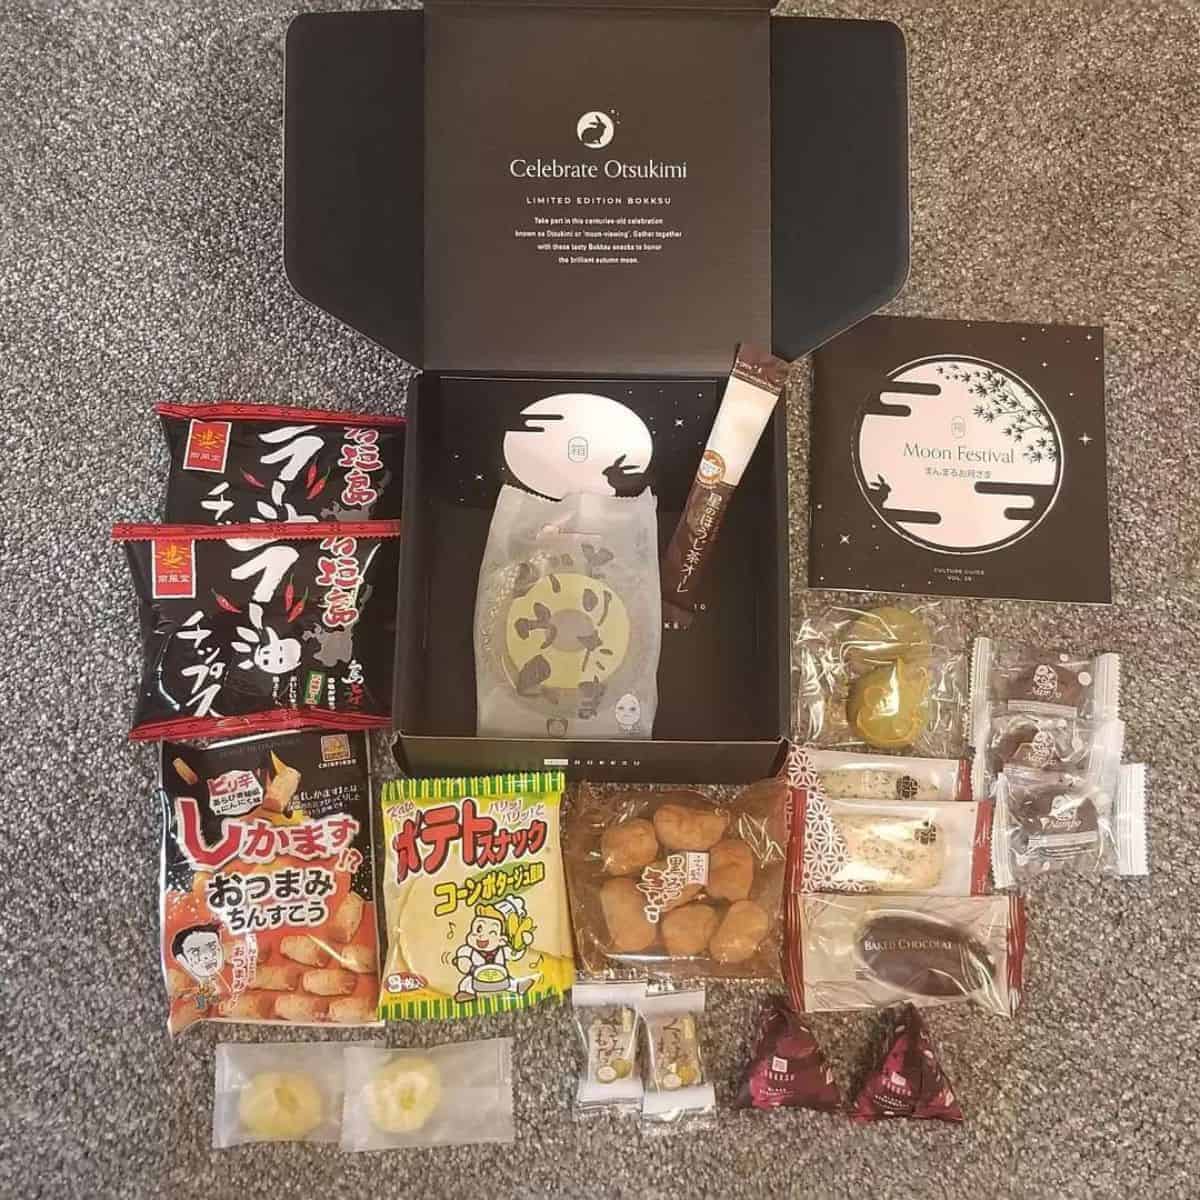 Authentic Japanese munchies surrounding a black Bokksu box